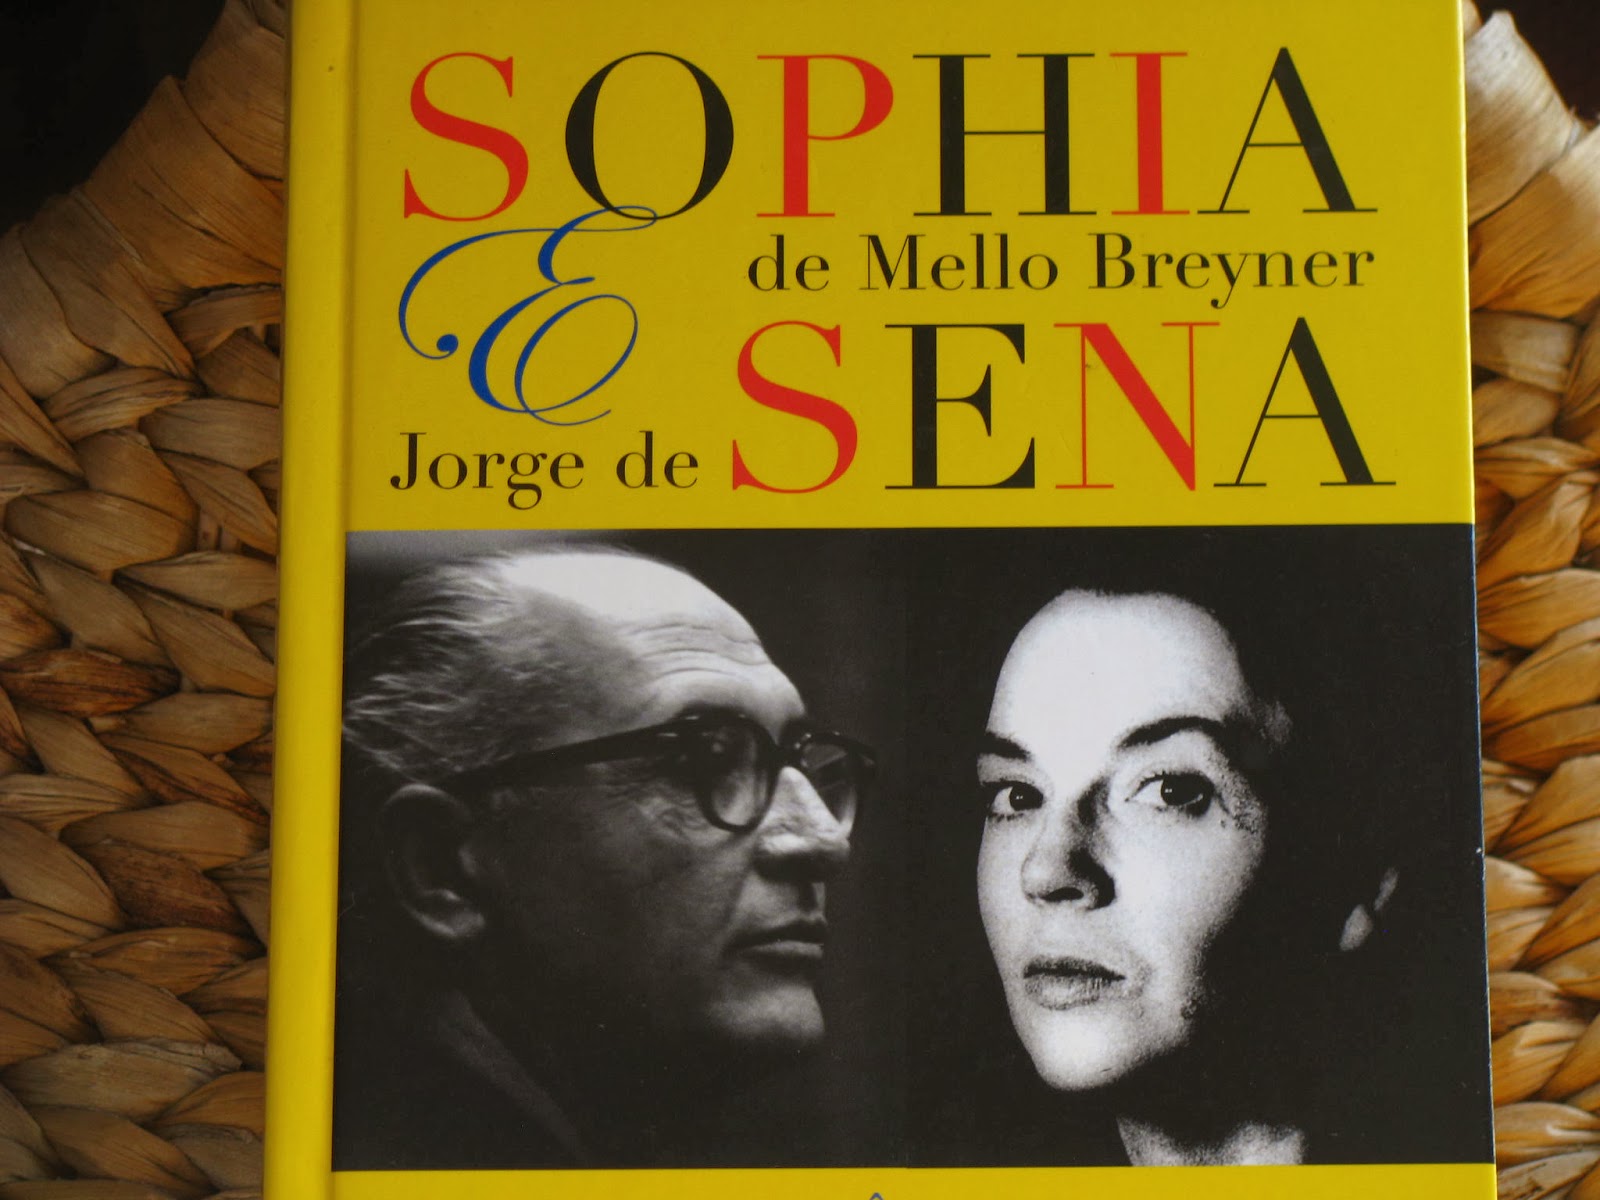 FRC | Palestra revela profunda amizade de Jorge de Sena e Sophia de Mello Breyner 